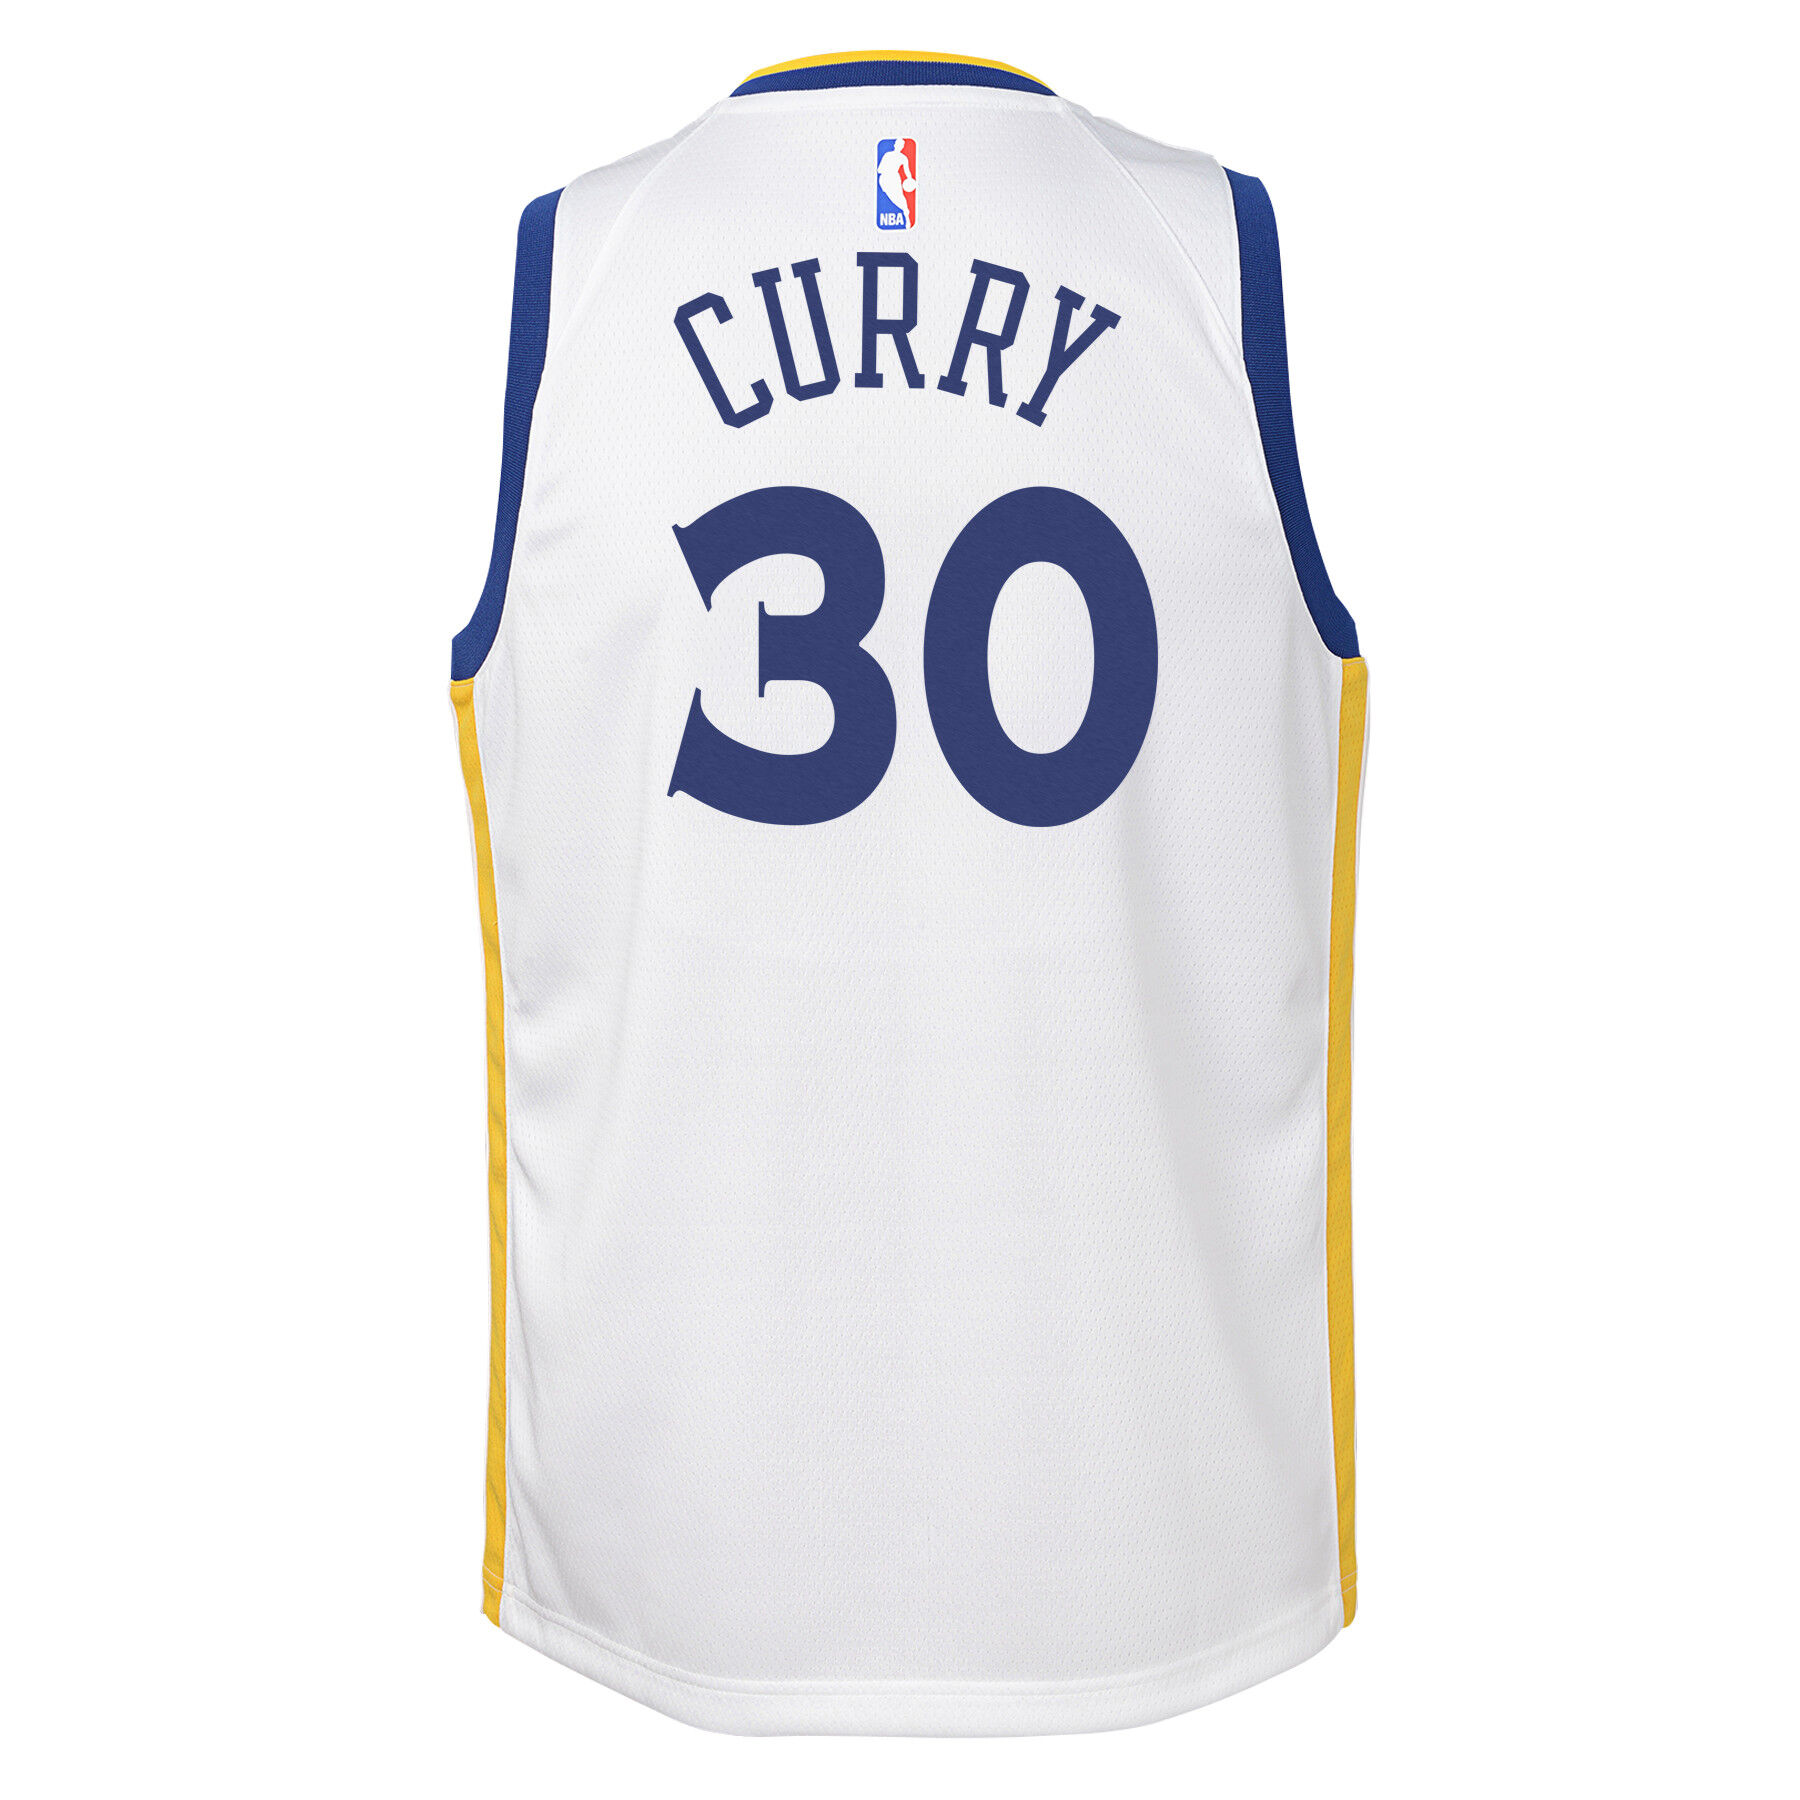 NBA Golden State Warriors Youth Medium M 10-12 Blue Hoodie Sweatshirt Curry